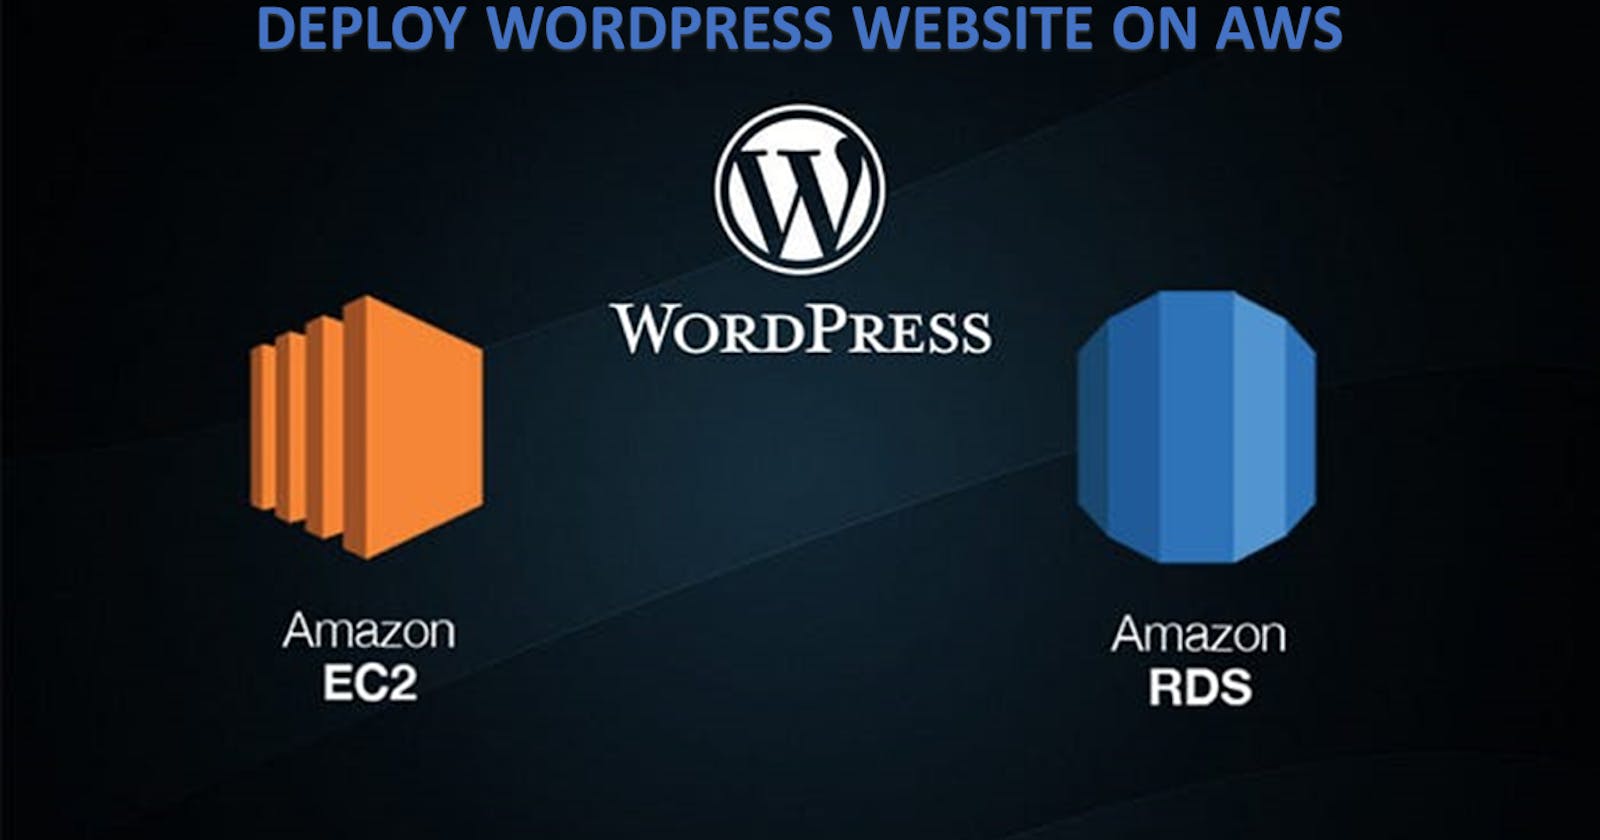 Deploy WordPress website on AWS